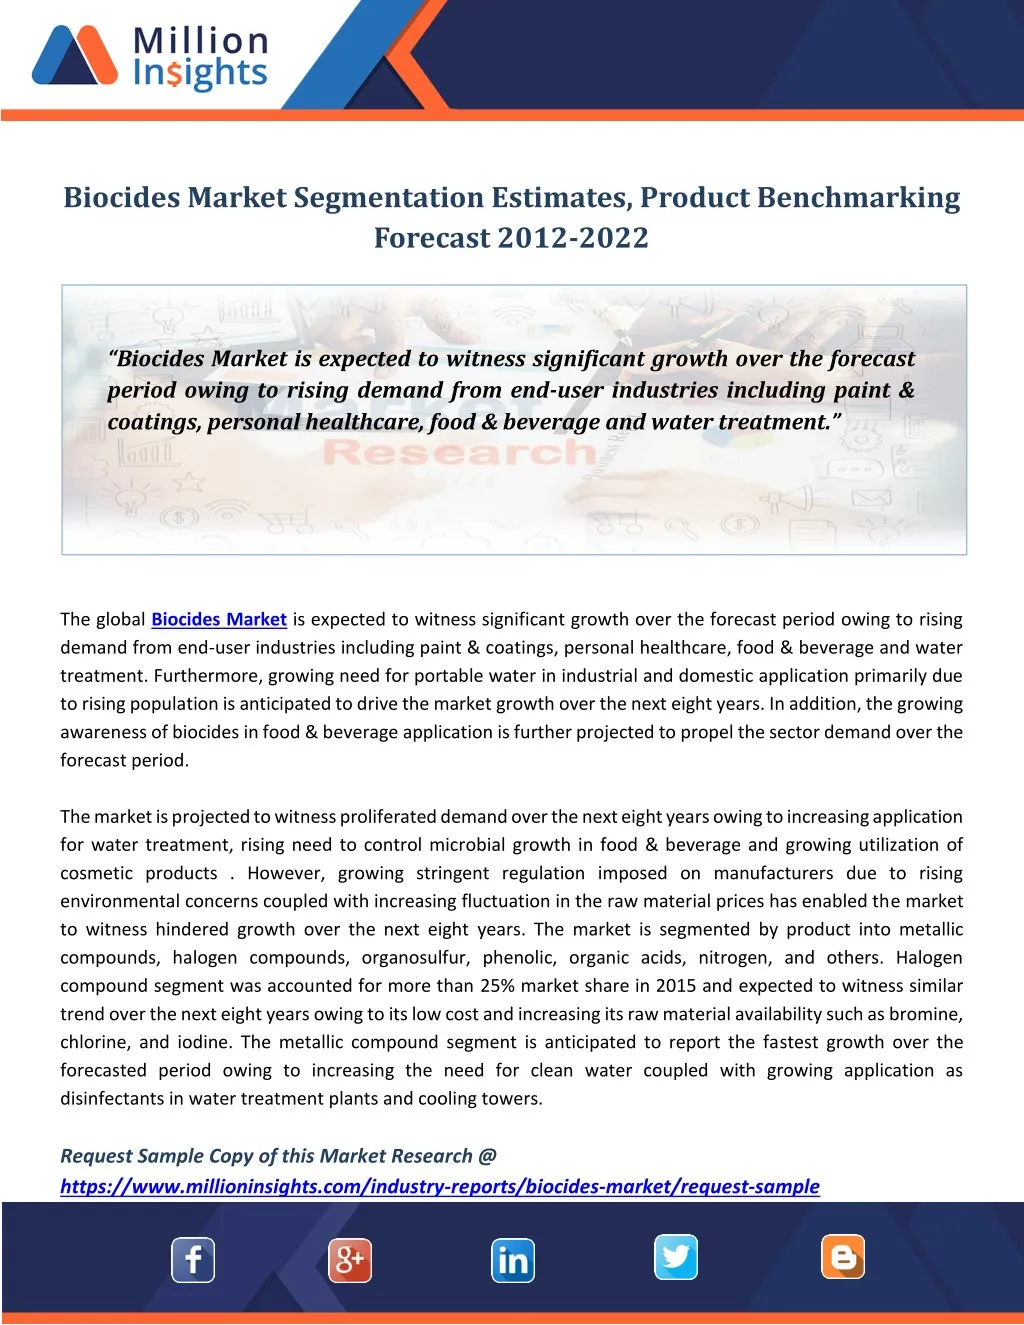 biocides market segmentation estimates product